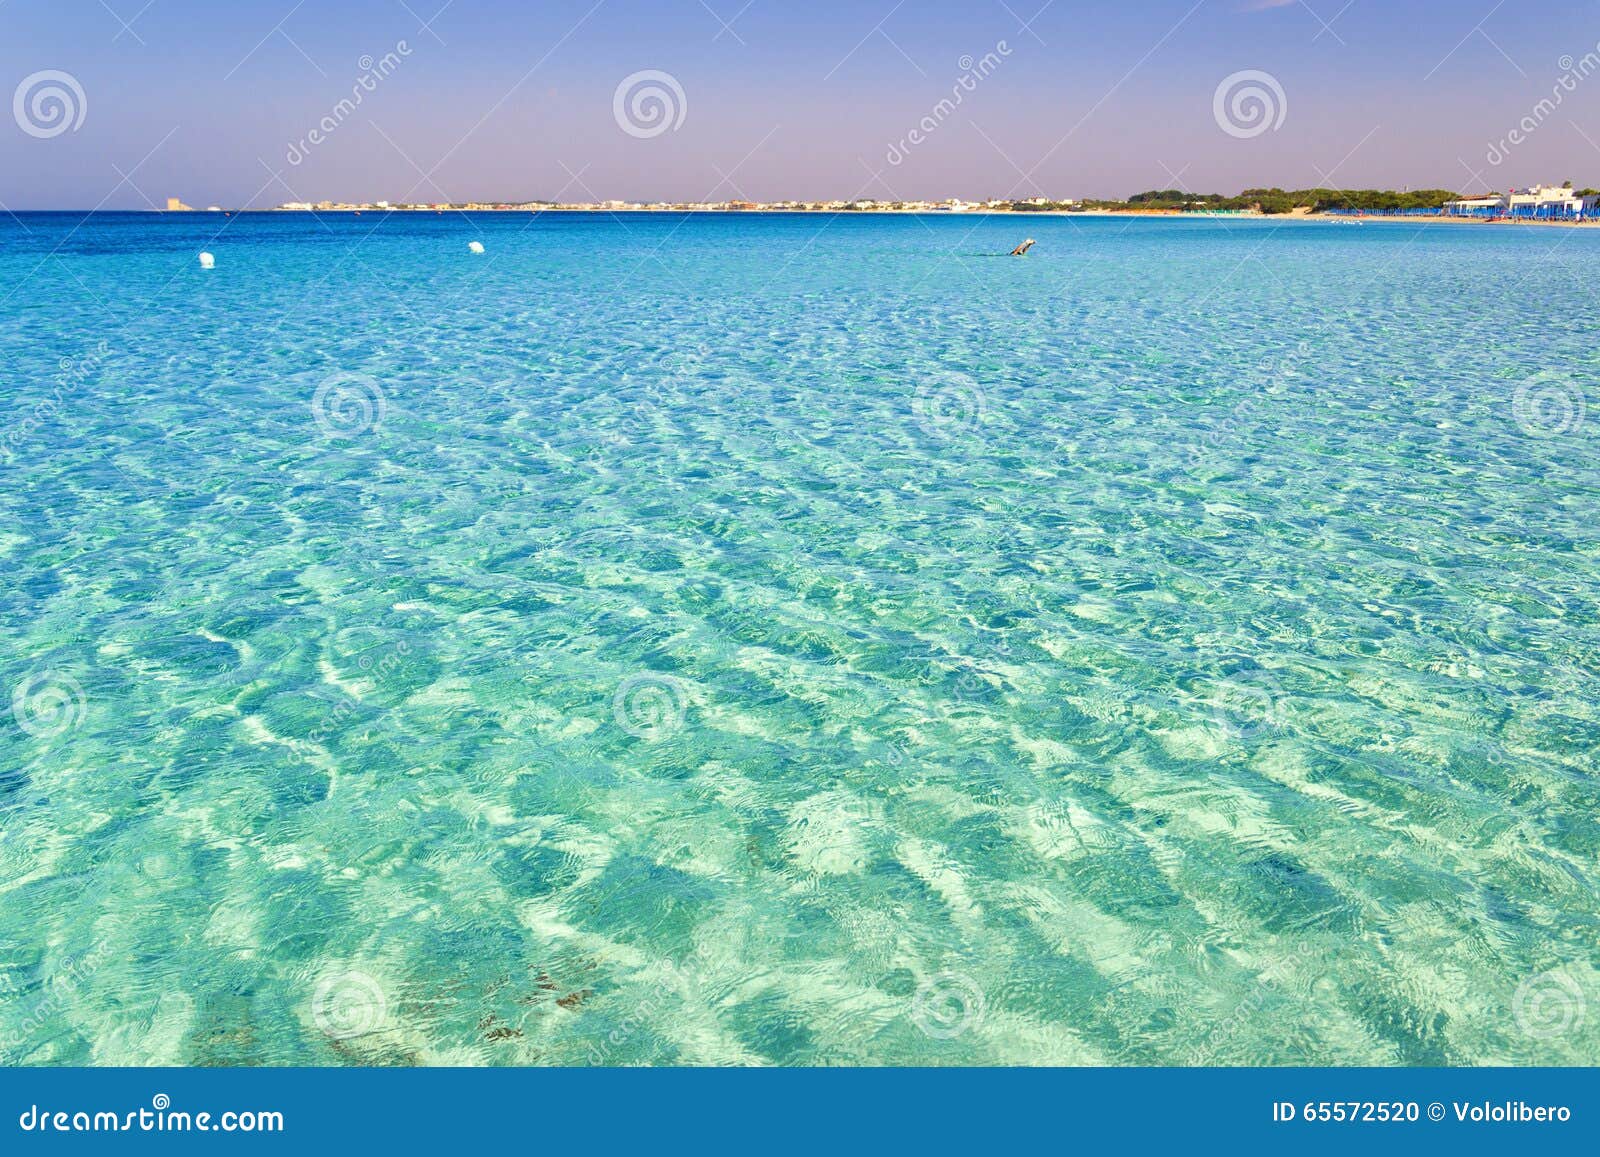 the most beautiful sandy beaches of apulia:porto cesareo marine,salento coast.italy (lecce).